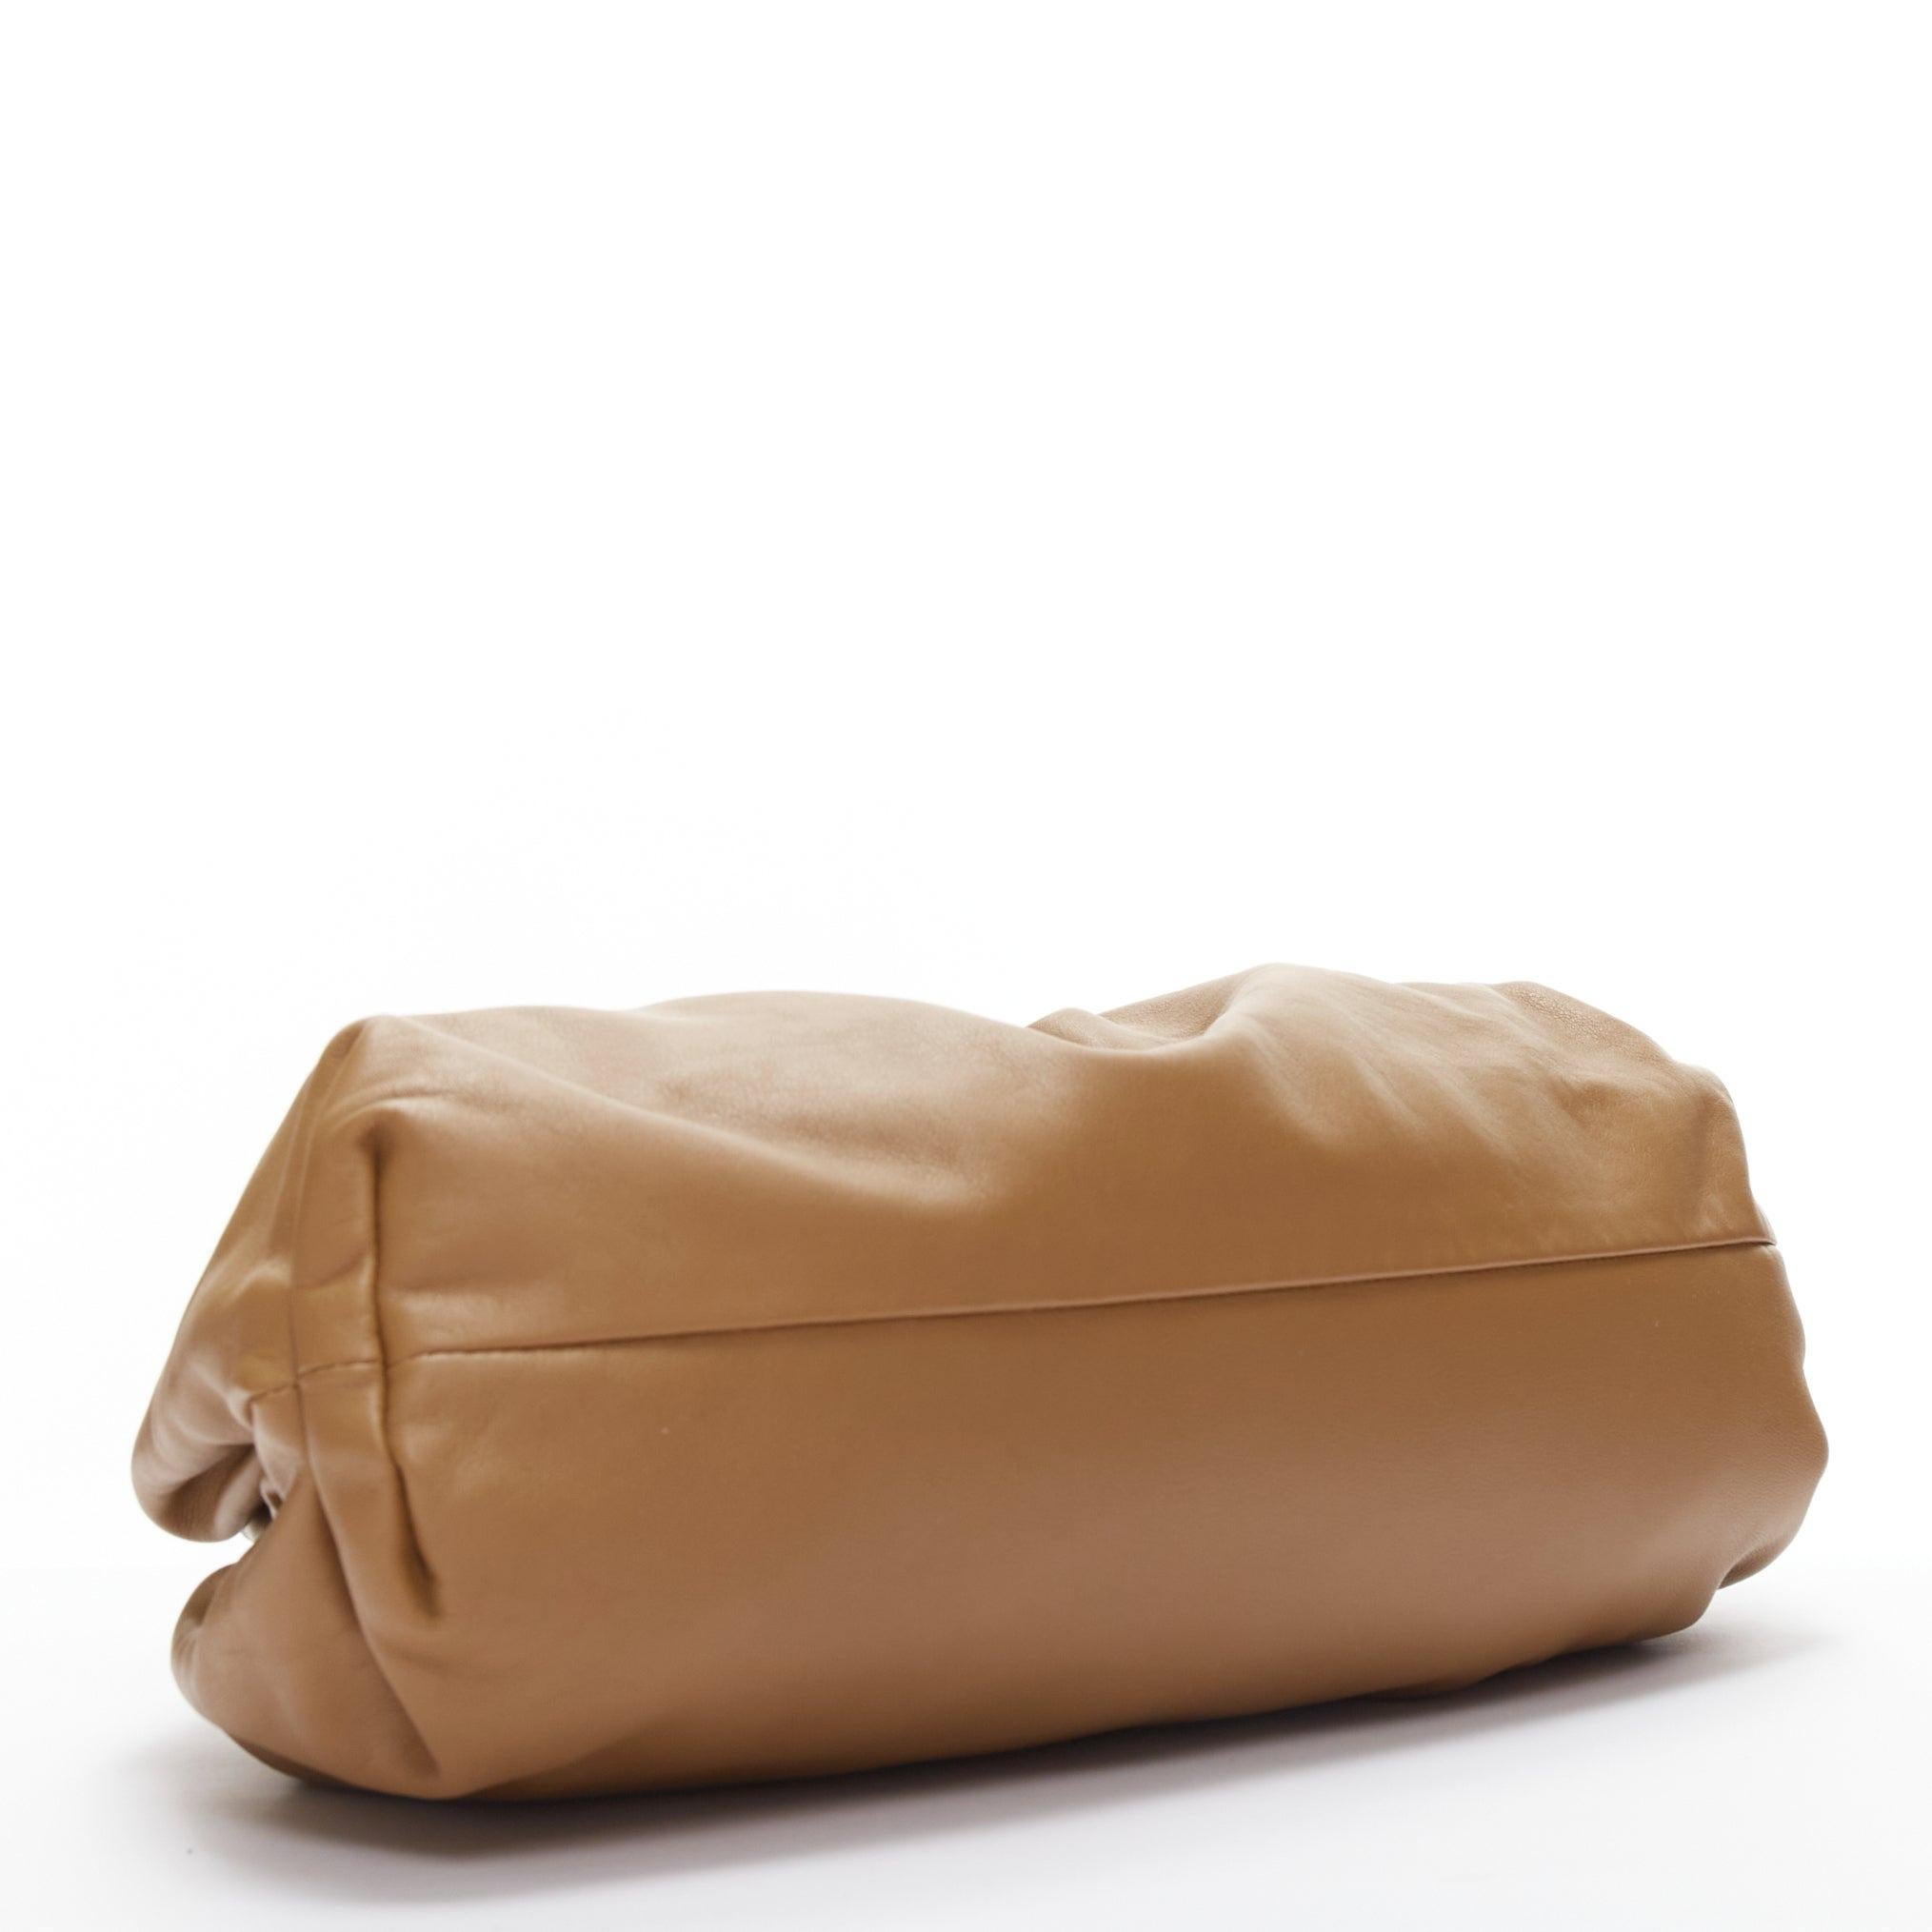 BOTTEGA VENETA The Pouch brown leather dumpling clutch bag For Sale 1